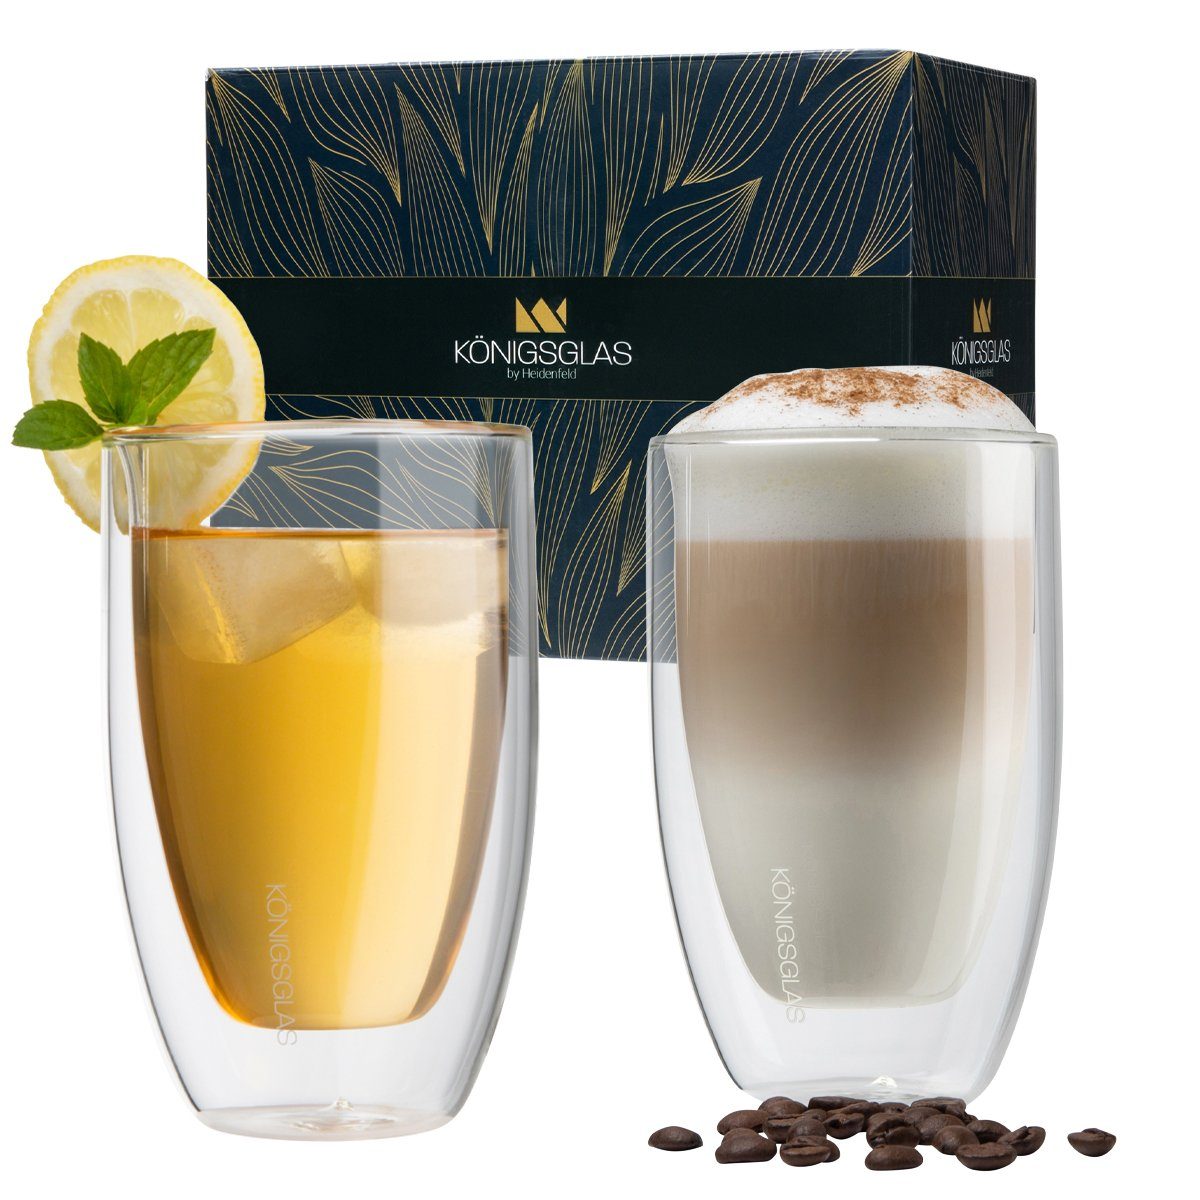 Königsglas Latte-Macchiato-Glas Latte Macchiato Glas 300 ml Cappuccino Стекло-Set doppelwandig, Kaffeetasse, 2/4er Glas Set Trinkglas Thermoglas Kaffee Teeglas Kaffeegläser Tasse